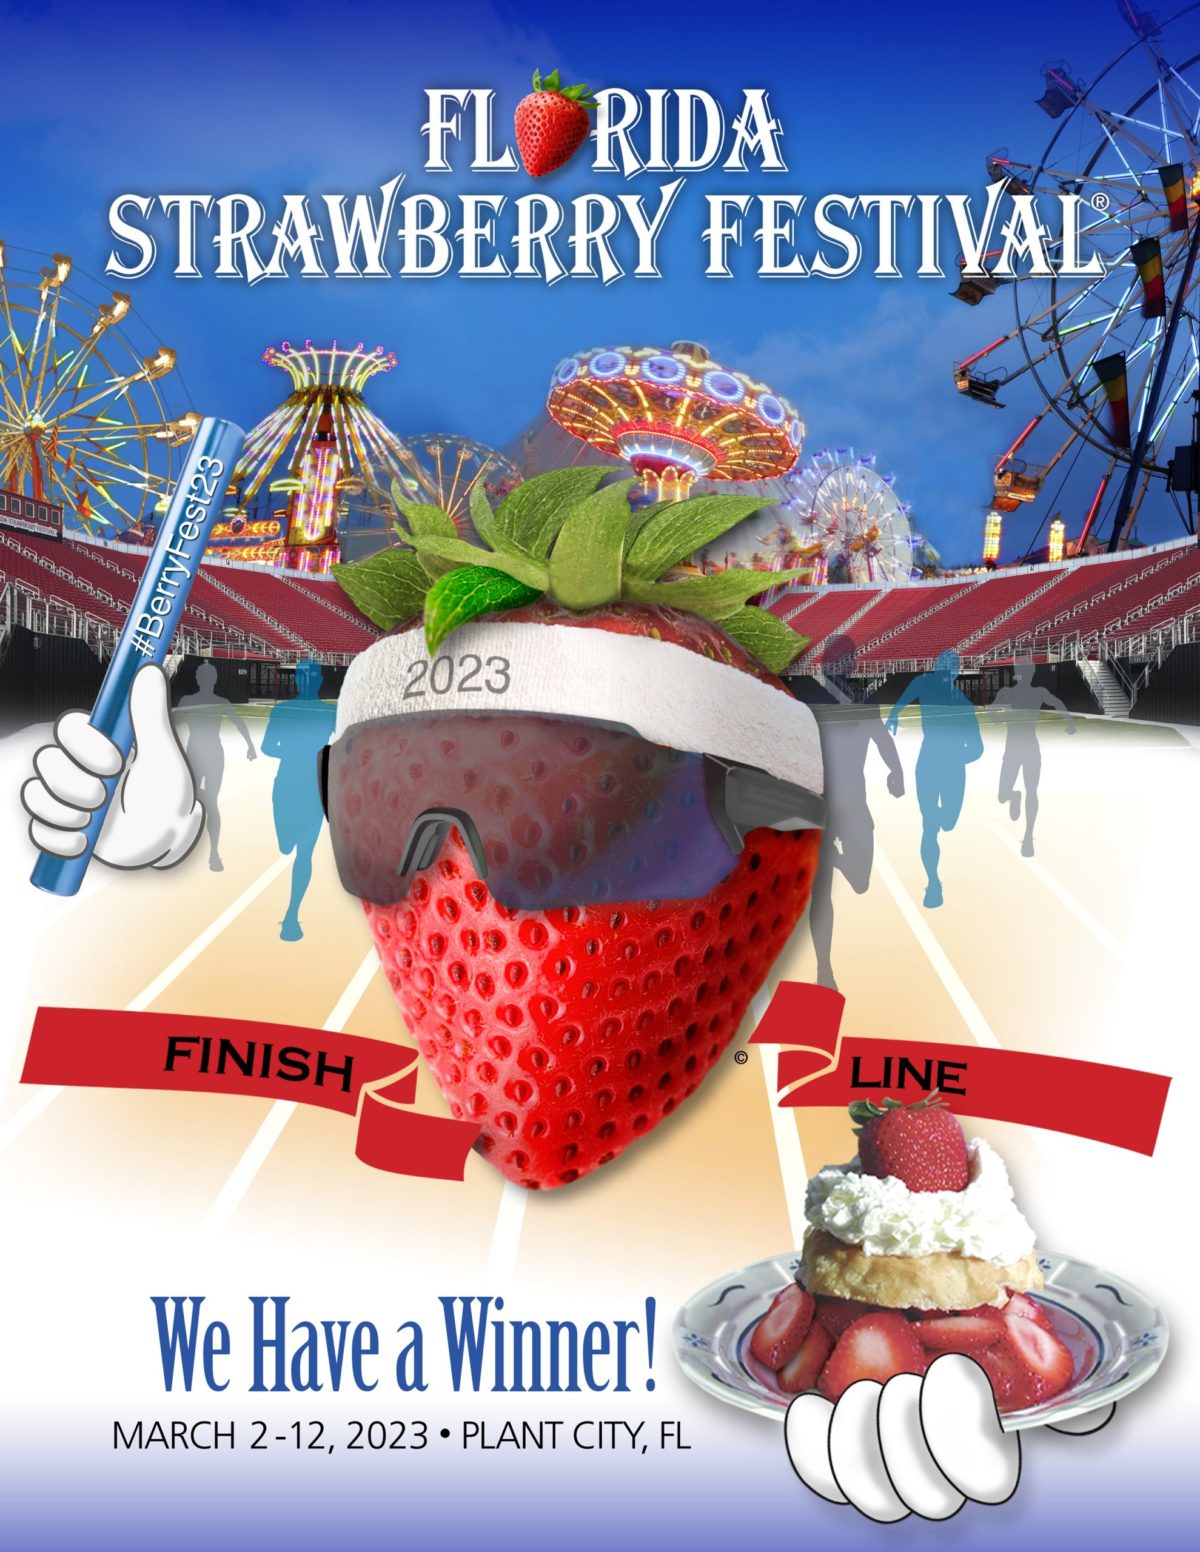 Florida Strawberry Festival 2023 Wristband Registration and Tickets